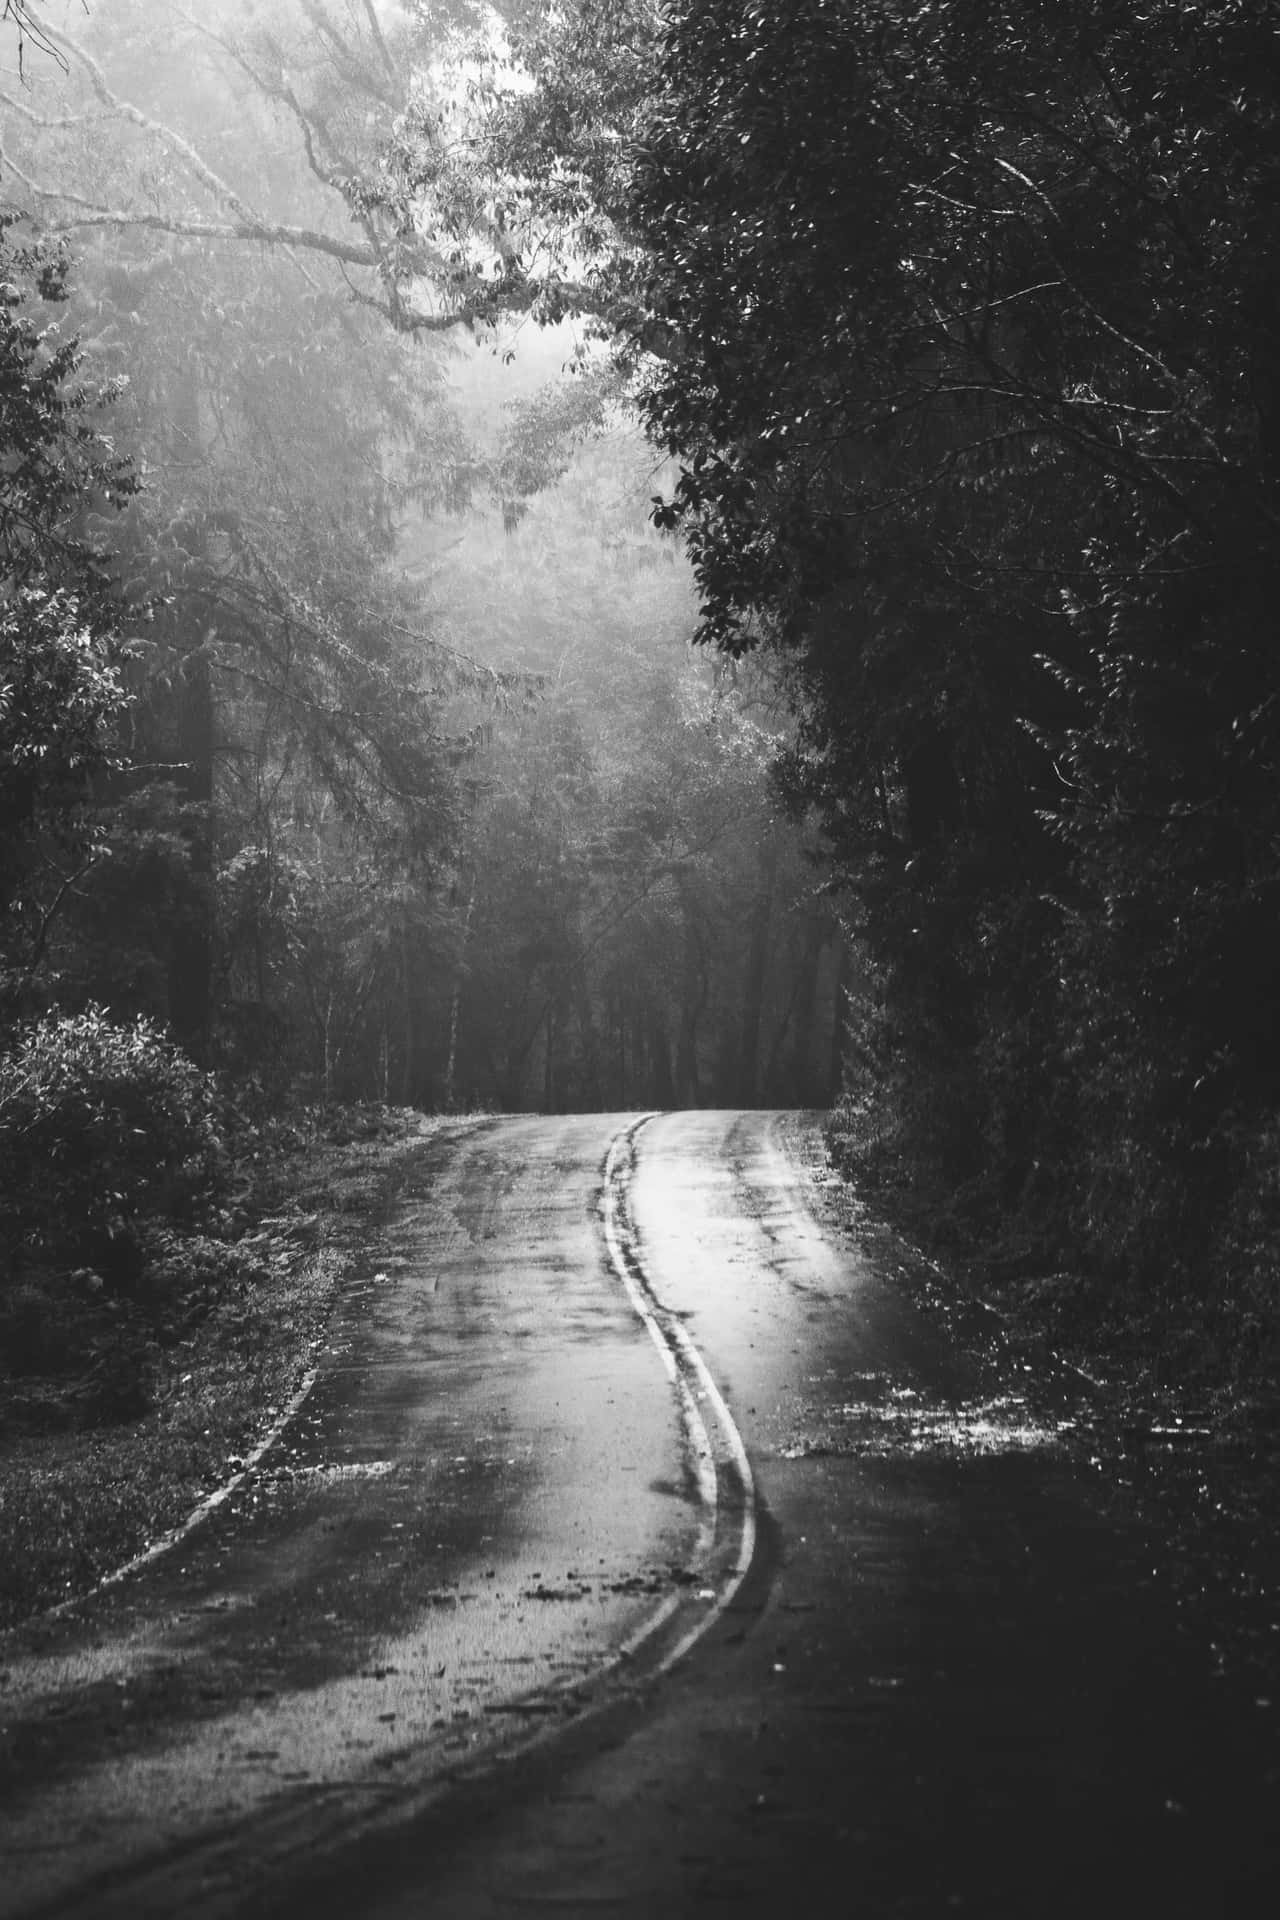 Monochrome Road With Gloomy Trees